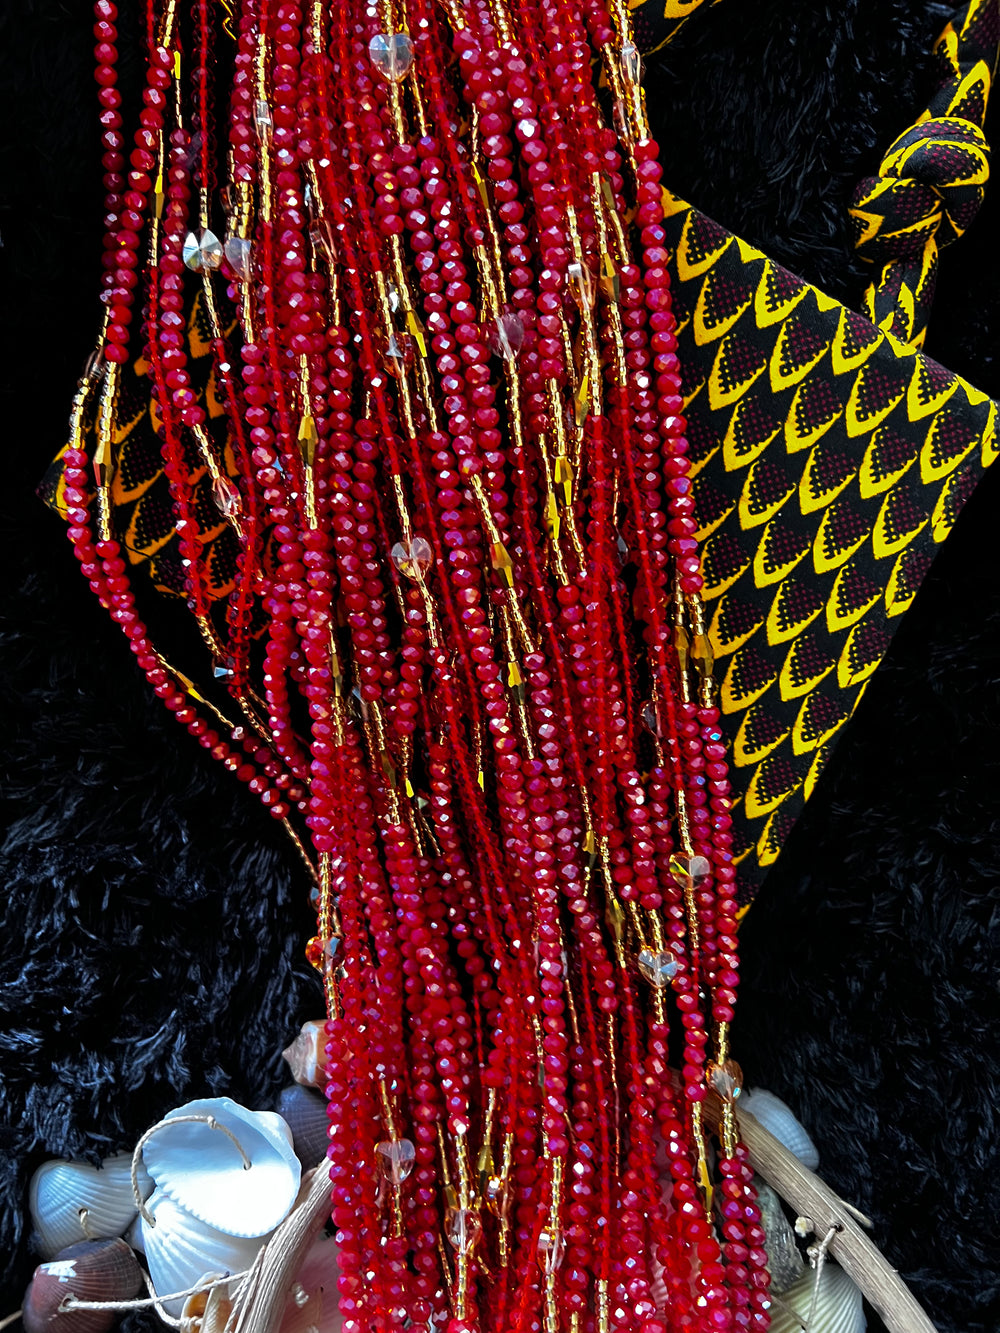 Red crystal waist beads.💎